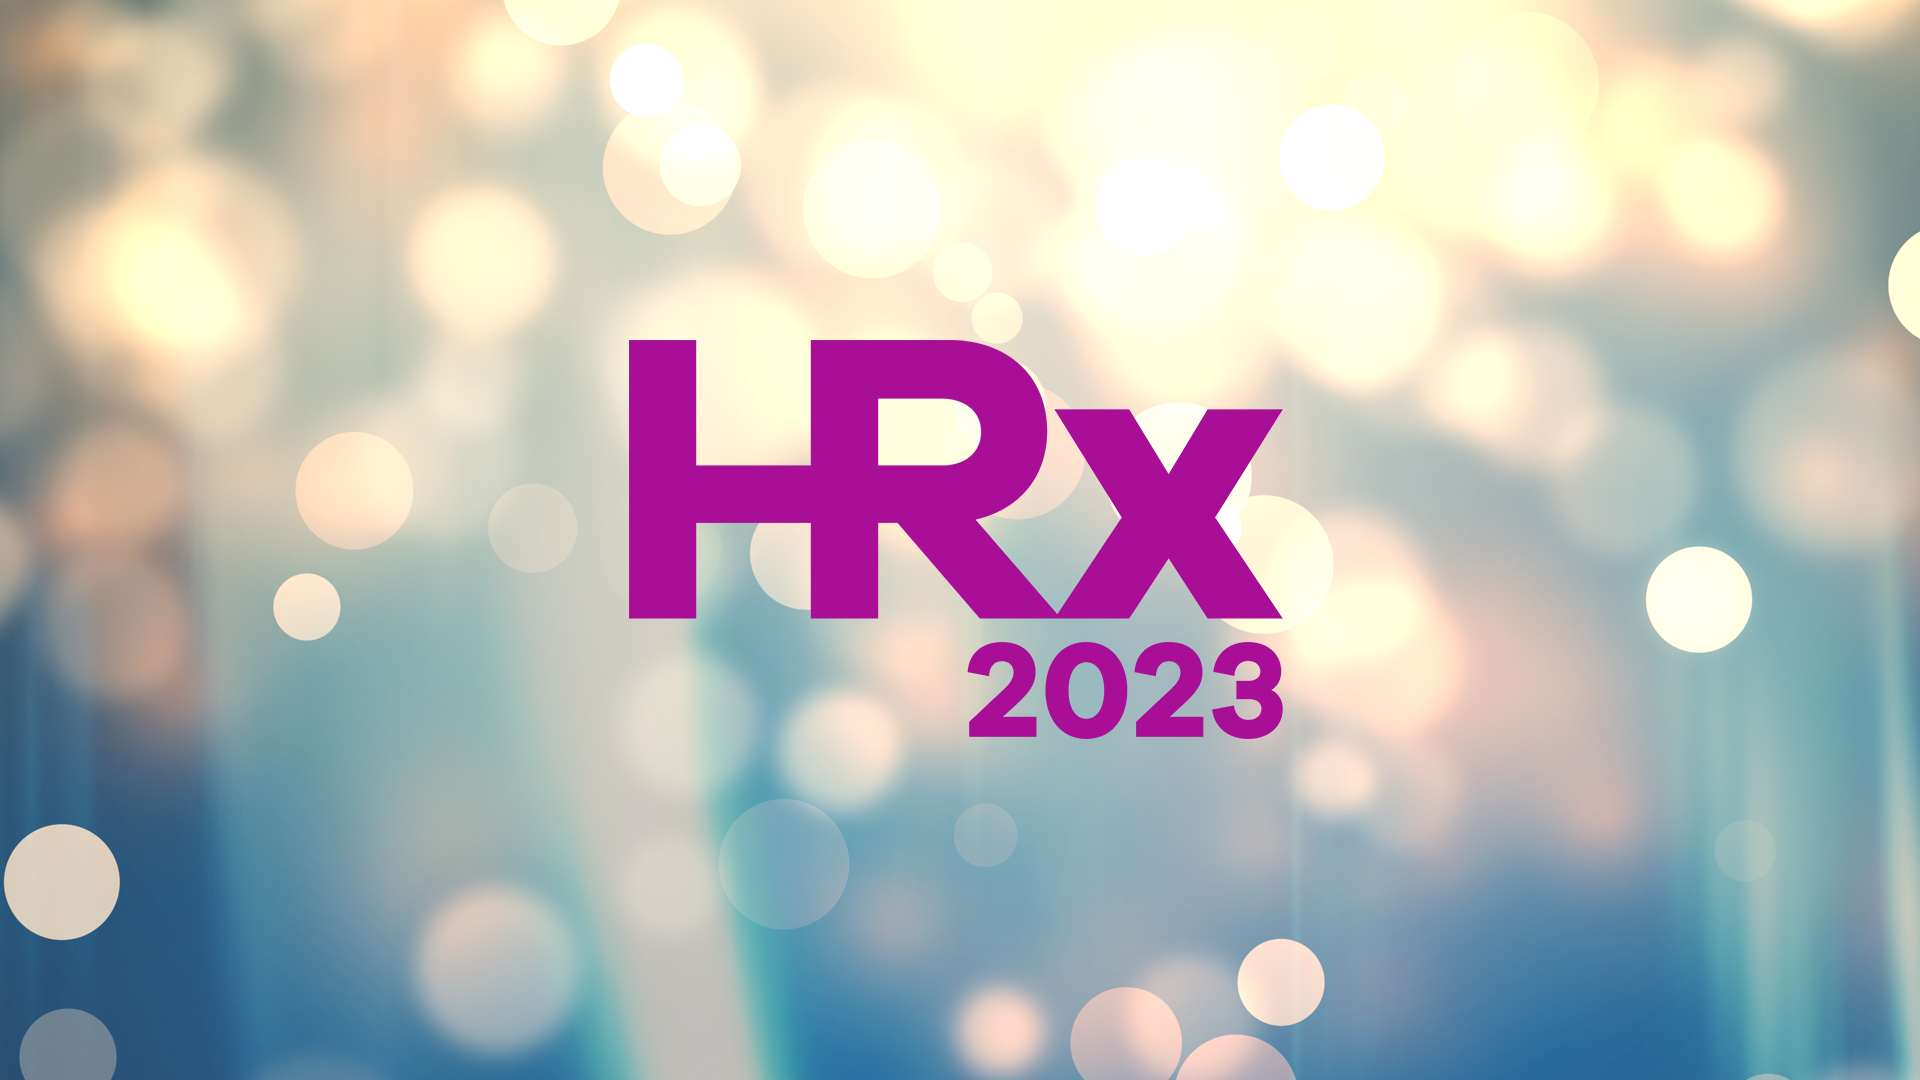 HRx 2023 x Integrata